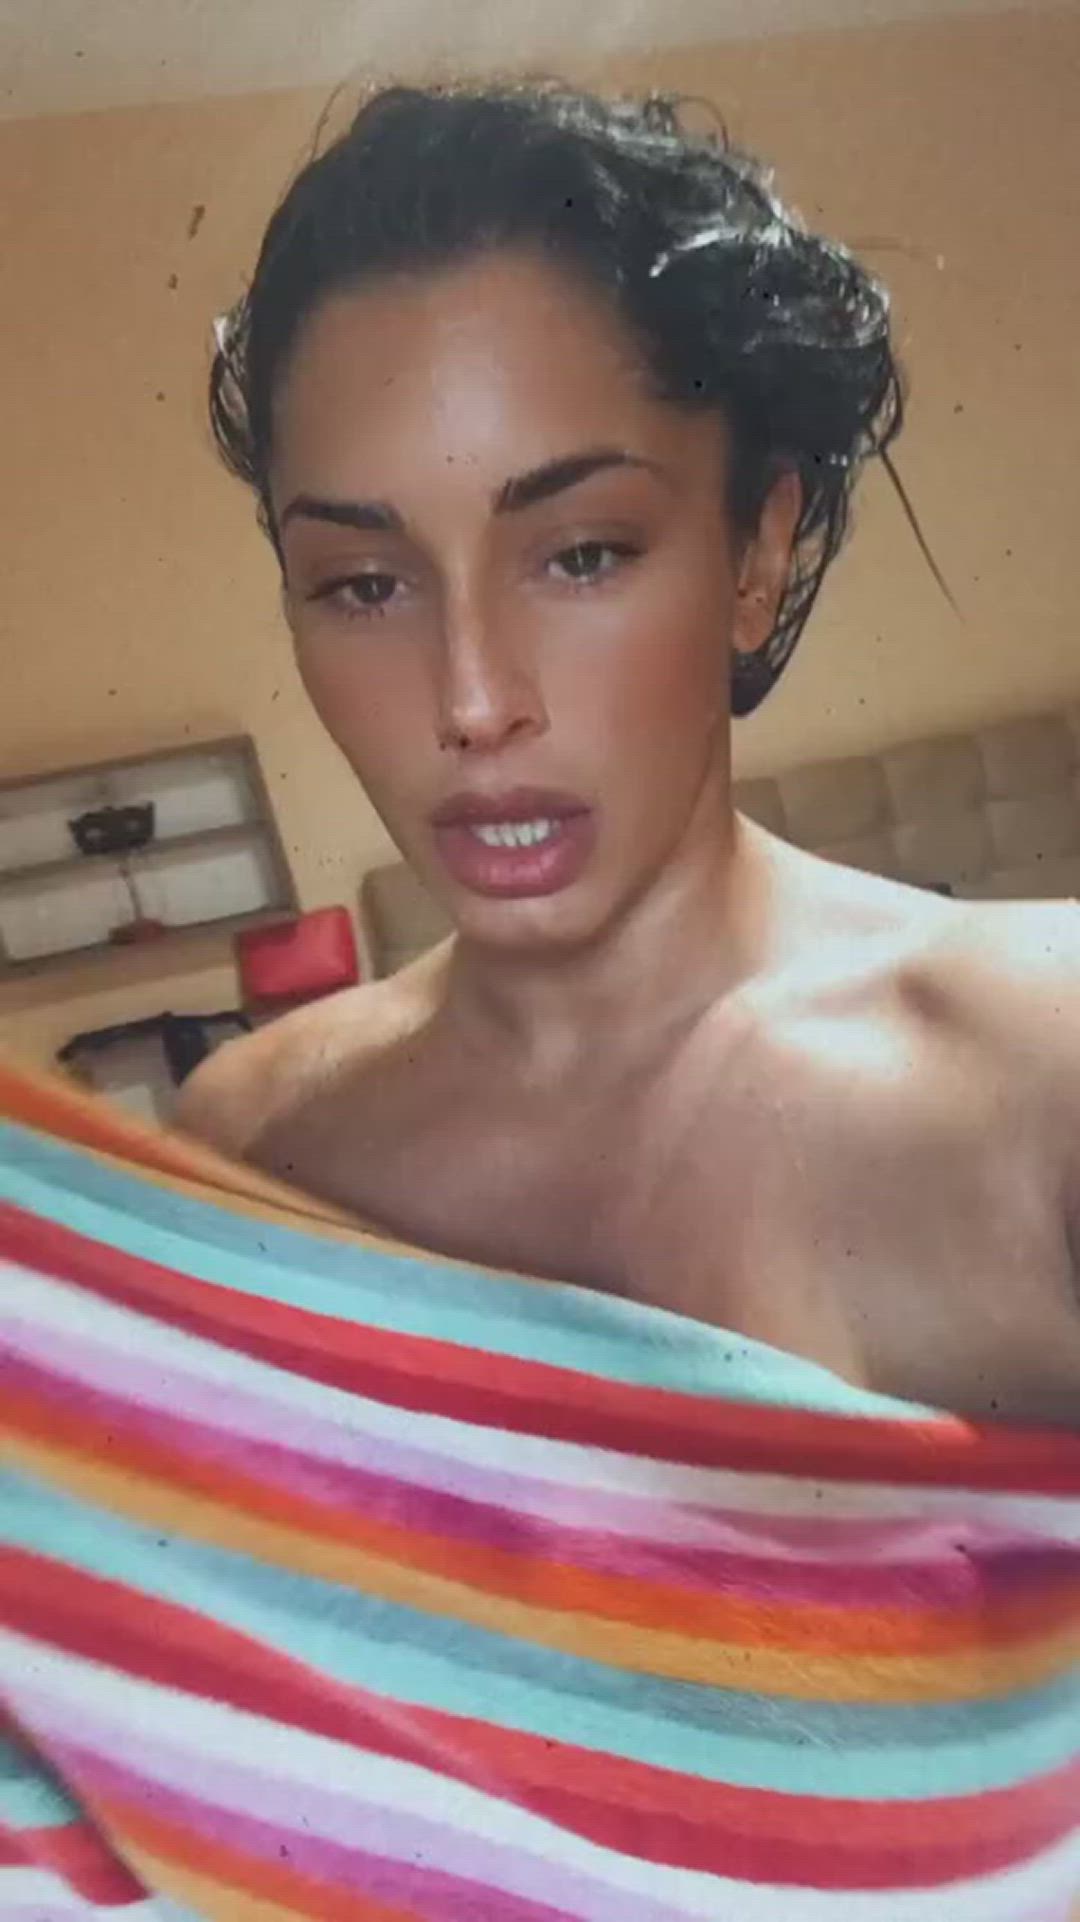 Ass porn video with onlyfans model milfgiuliadaqna <strong>@giuliadaqna</strong>